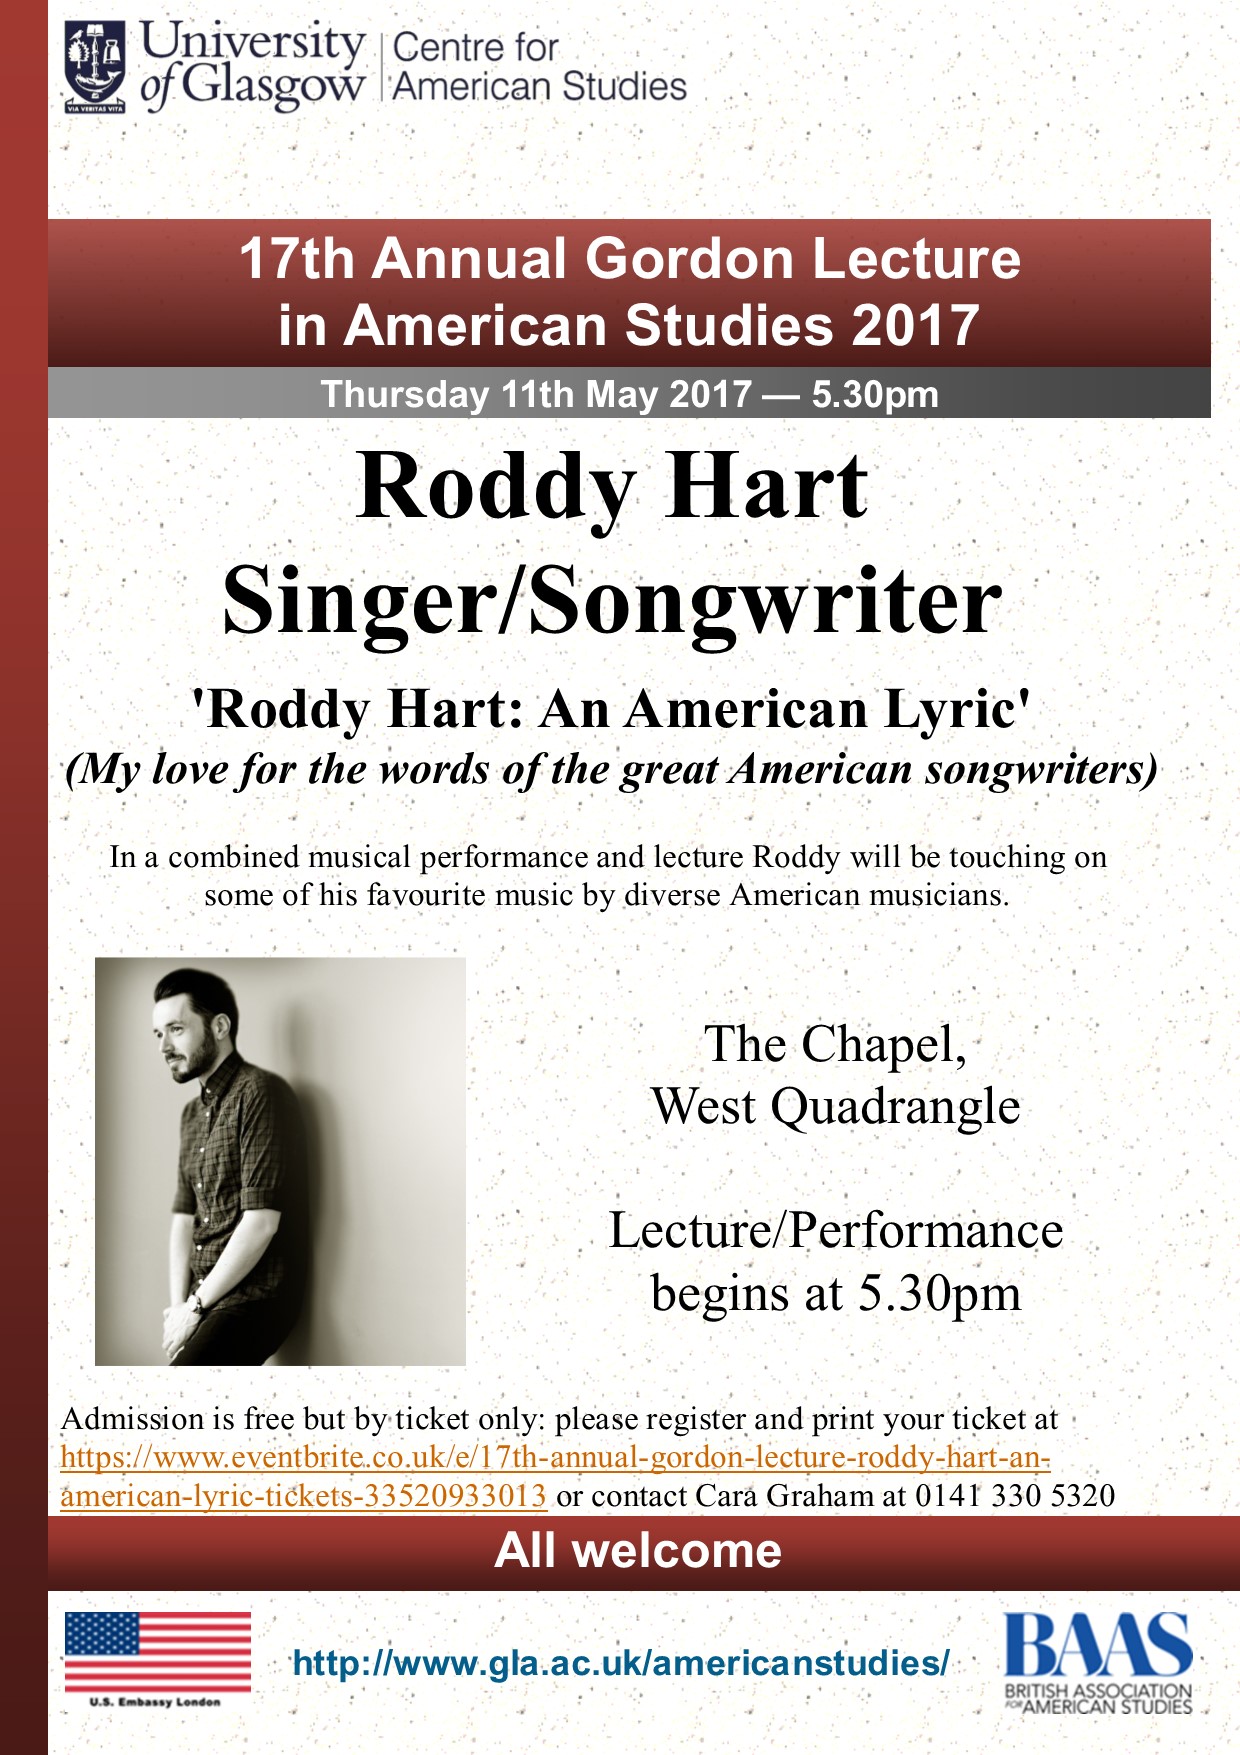 Roddy Hart: An American Lyric